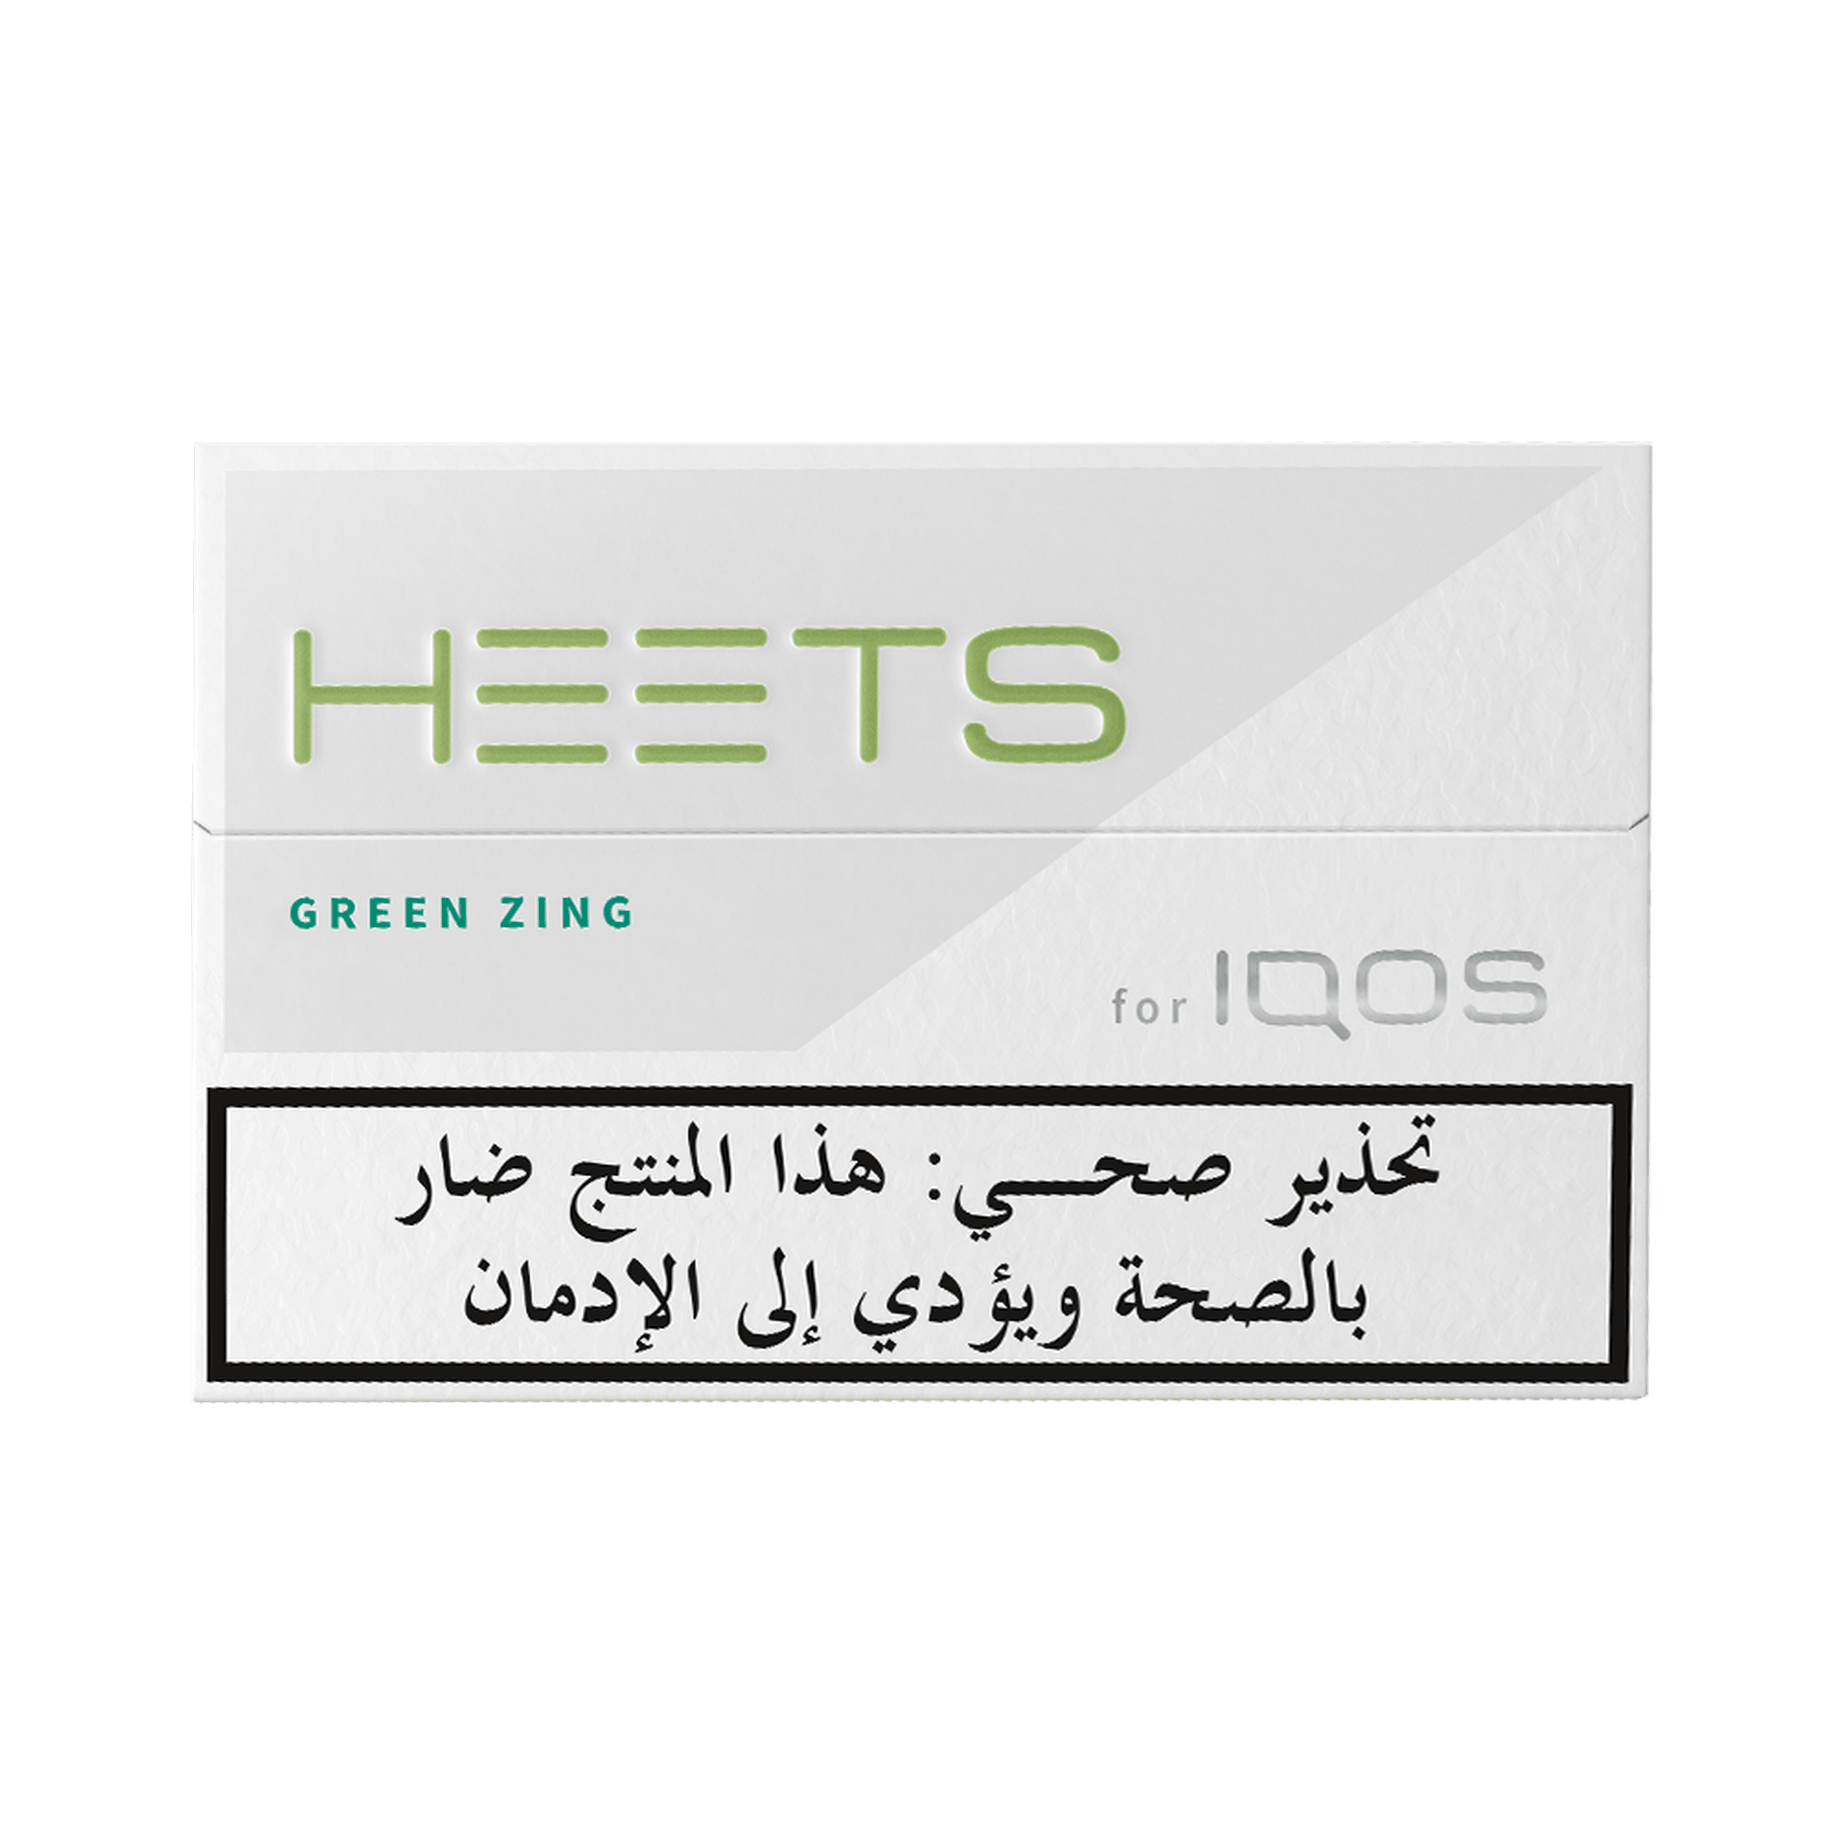 HEETS For IQOS Green ZING Label Carton of 10 Packs - كروز هيتس جرين - Shishabox